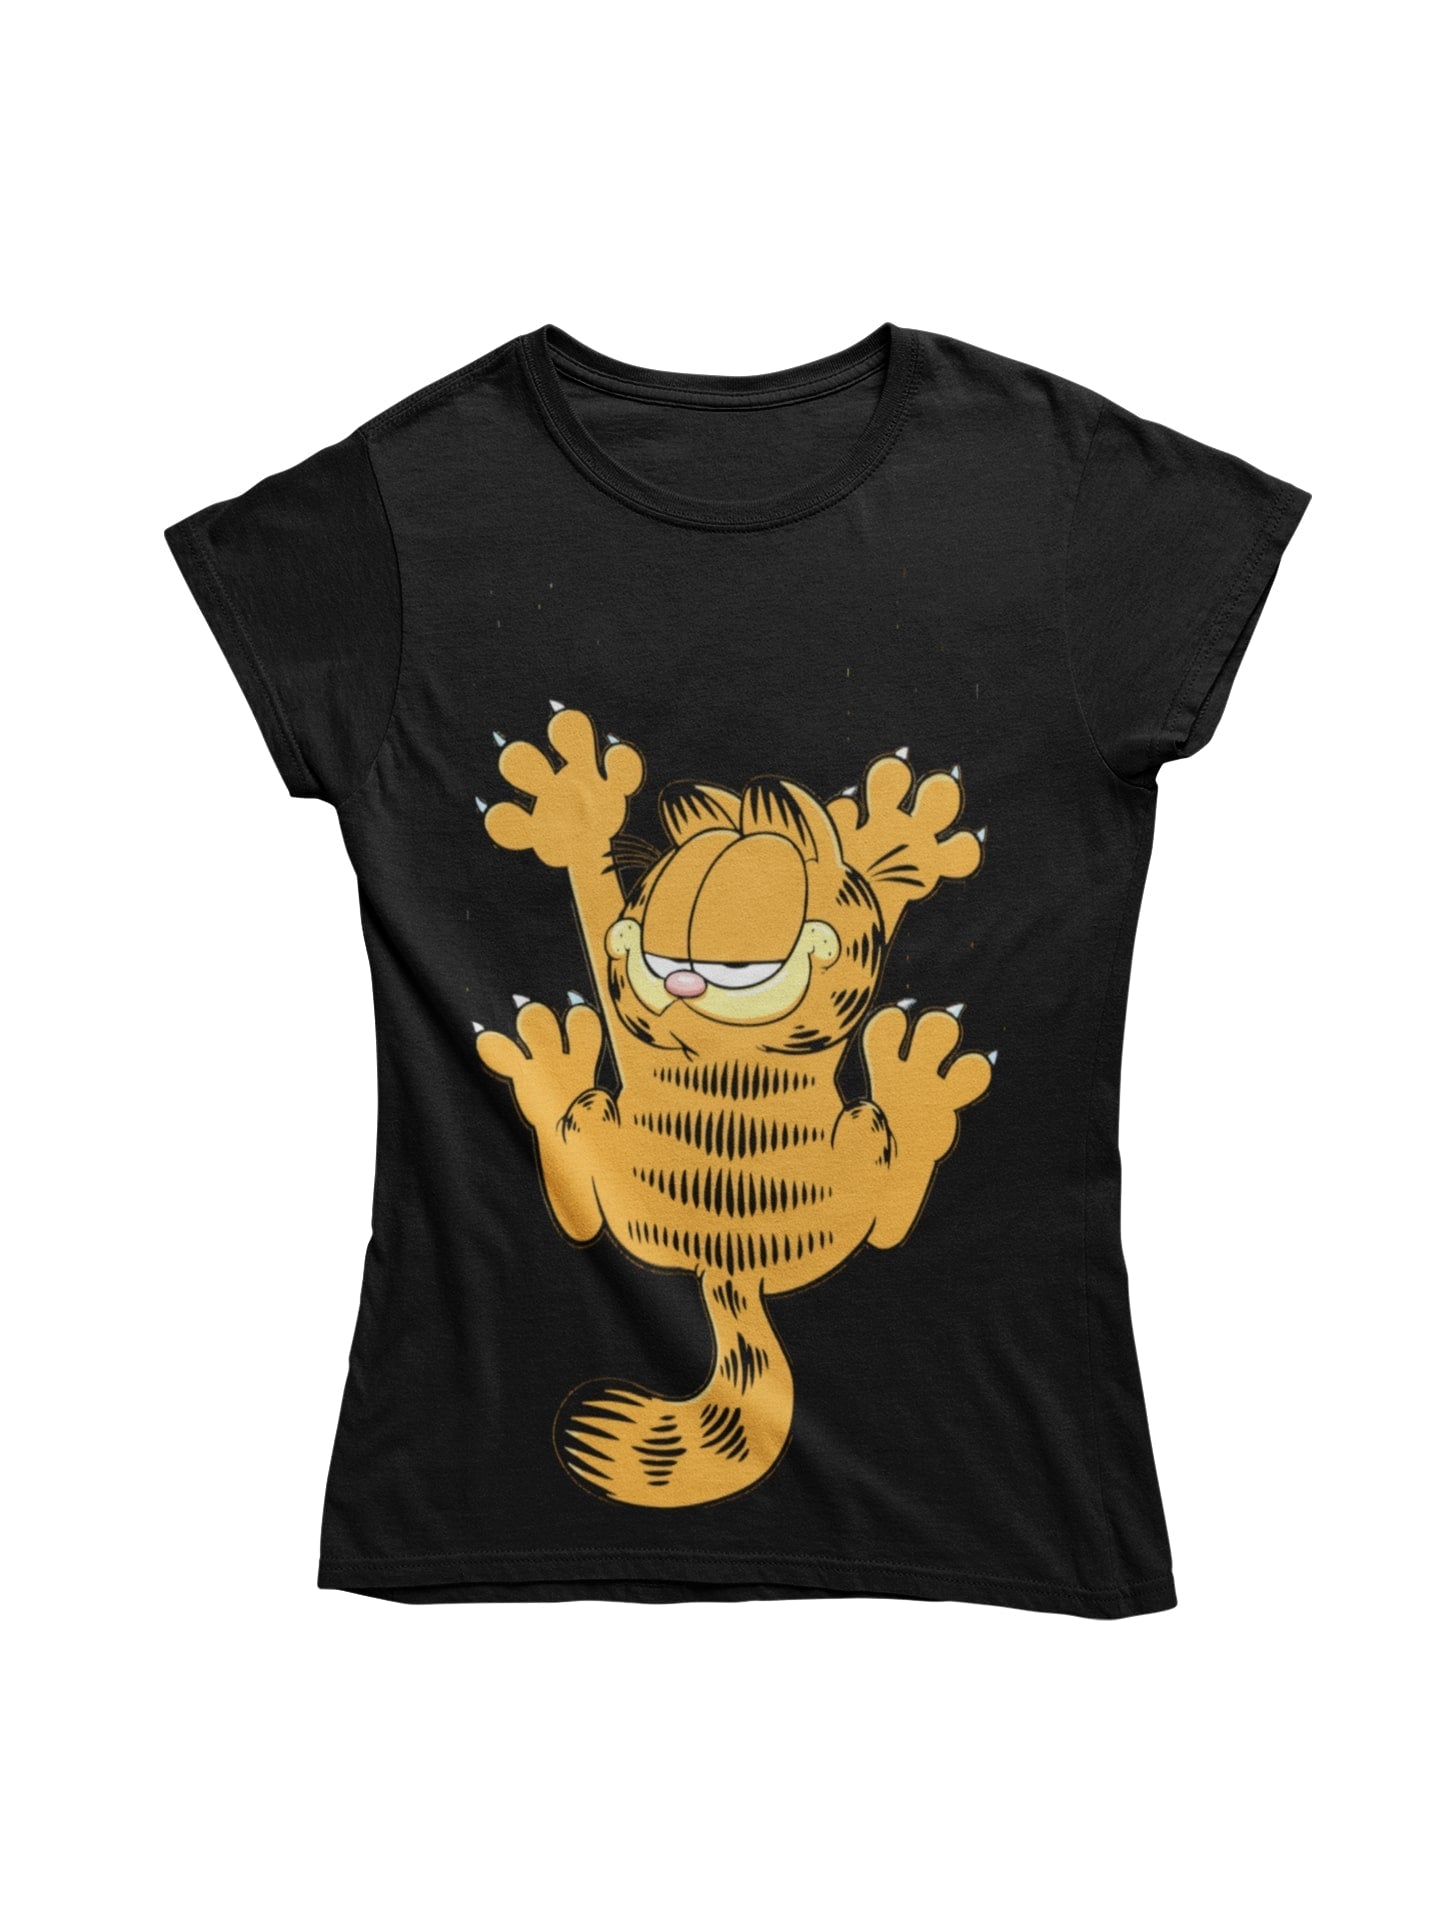 thelegalgang,Garfield Scratch T shirt for Women,WOMEN.